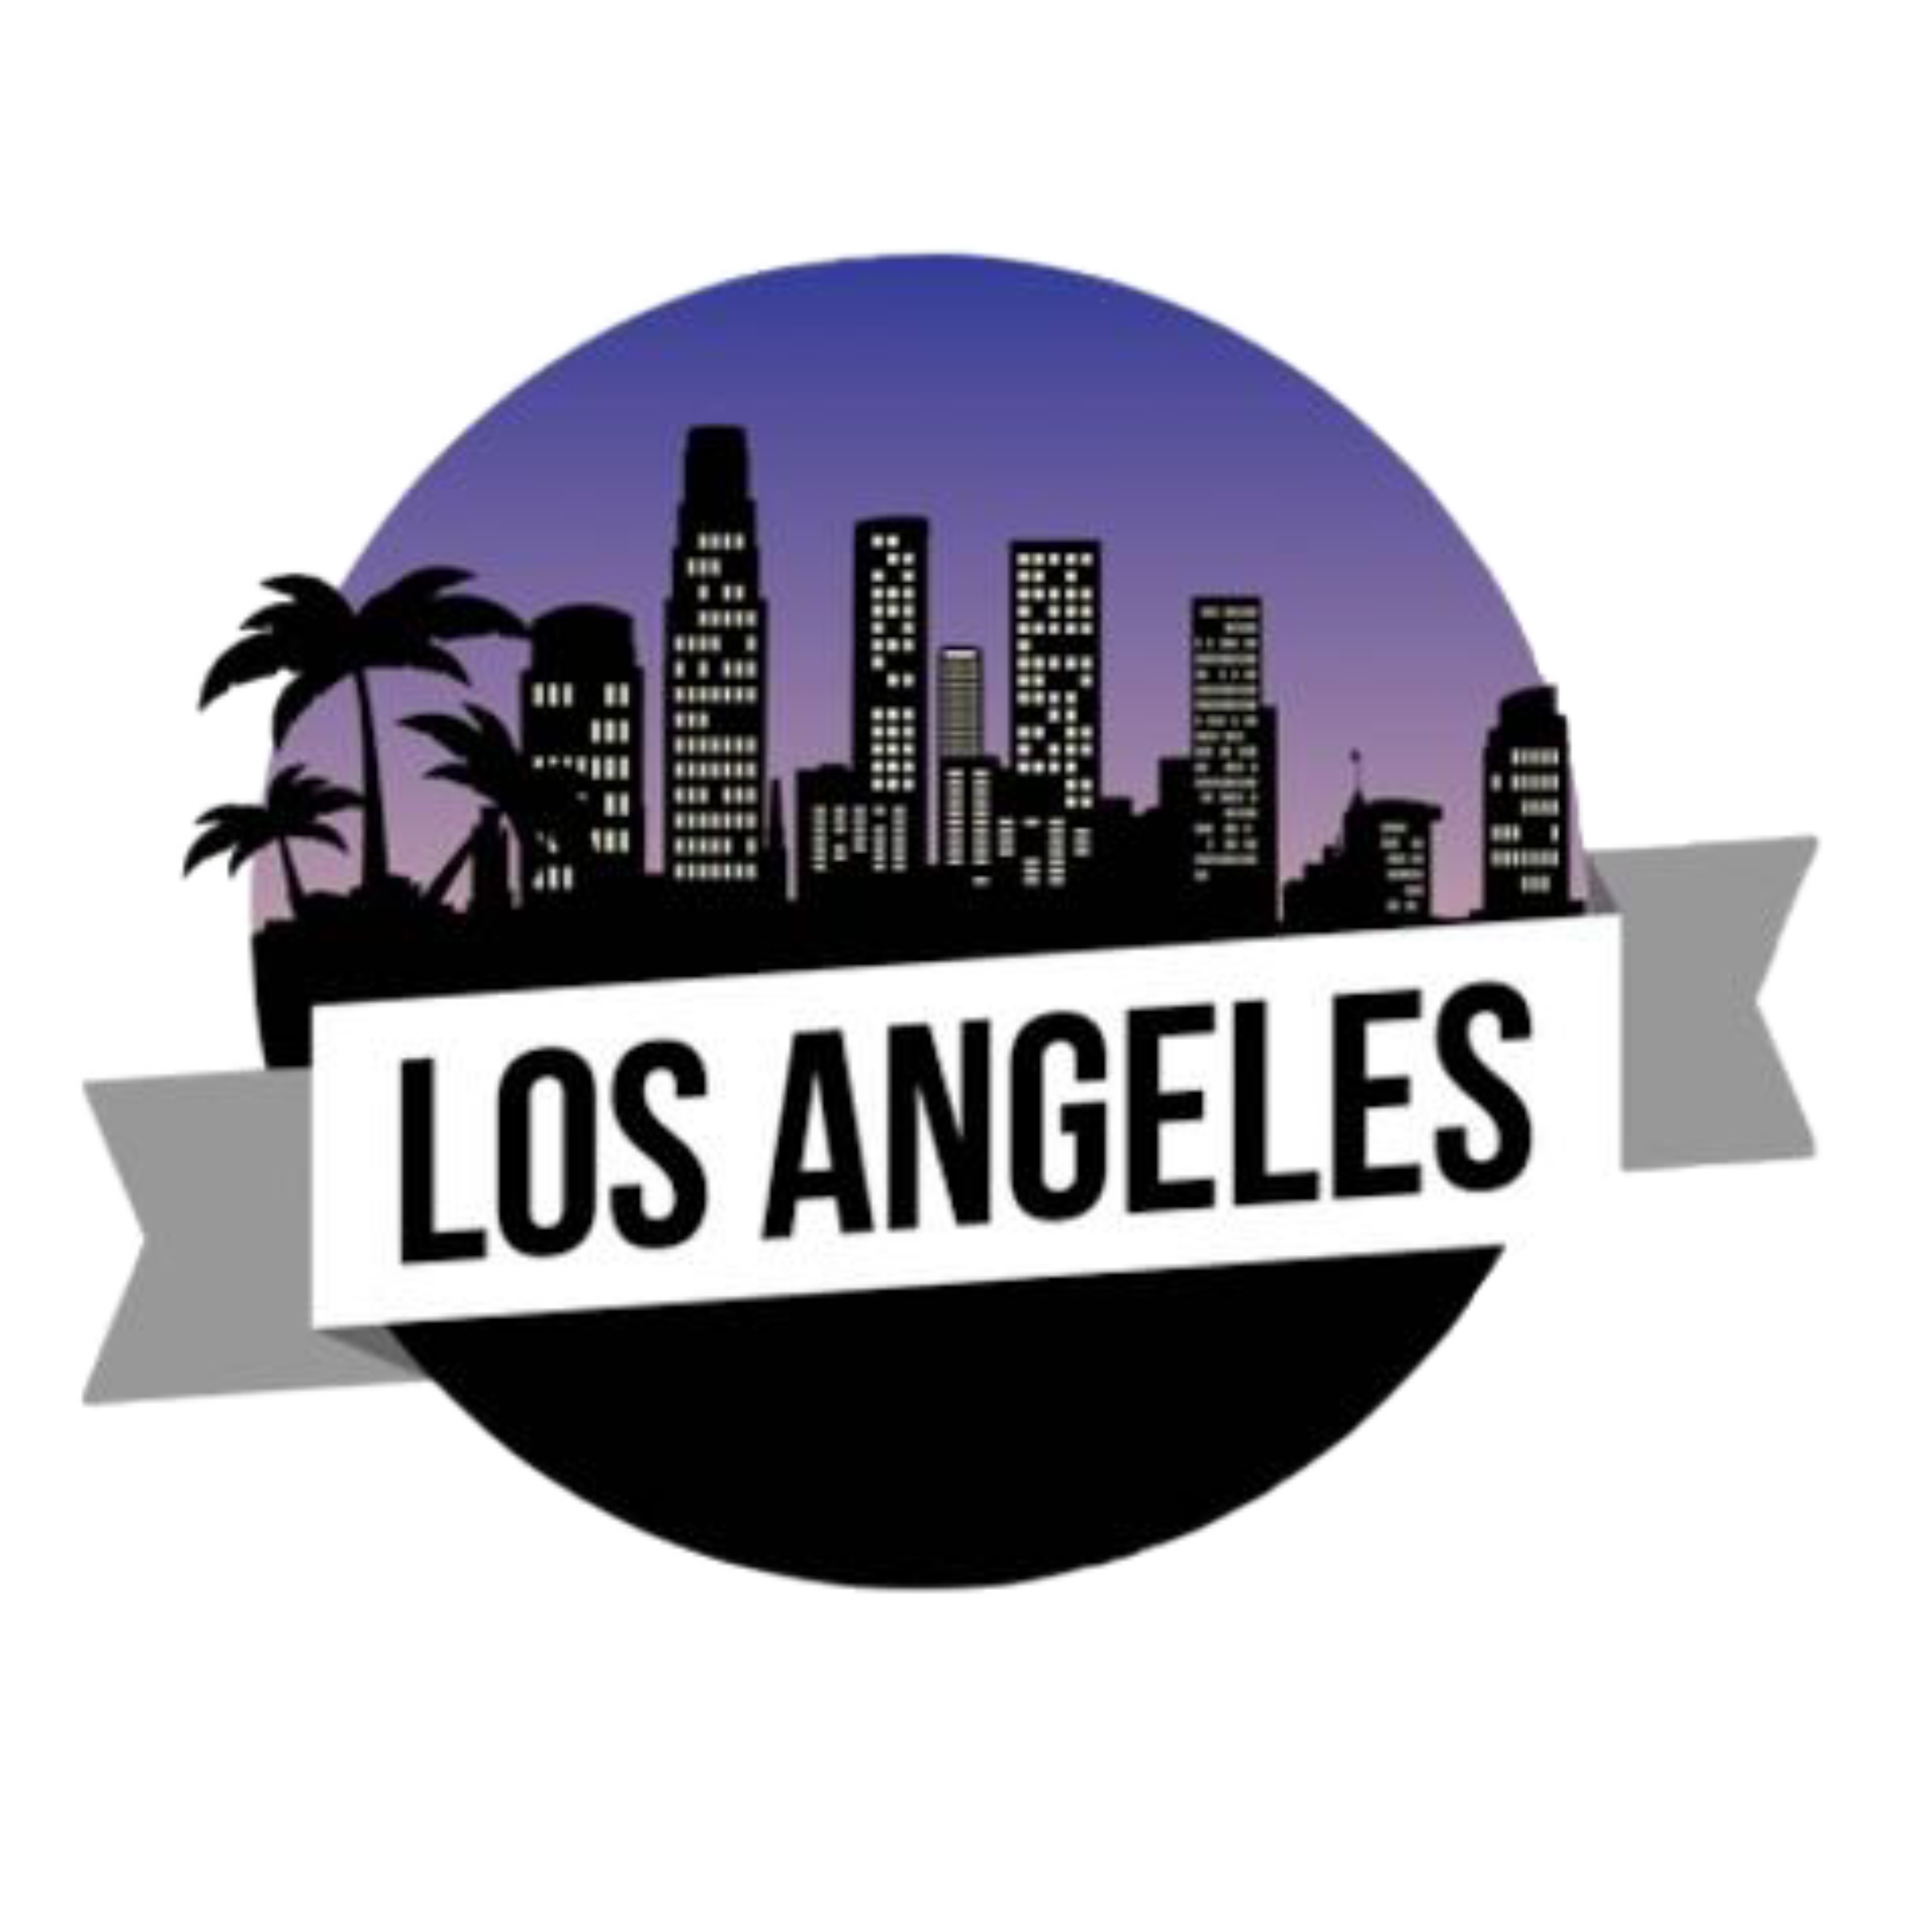 Лост анджелес текст френдли. Лос-Анджелес. Los Angeles надпись. La Лос Анджелес. Los Angeles логотип la.